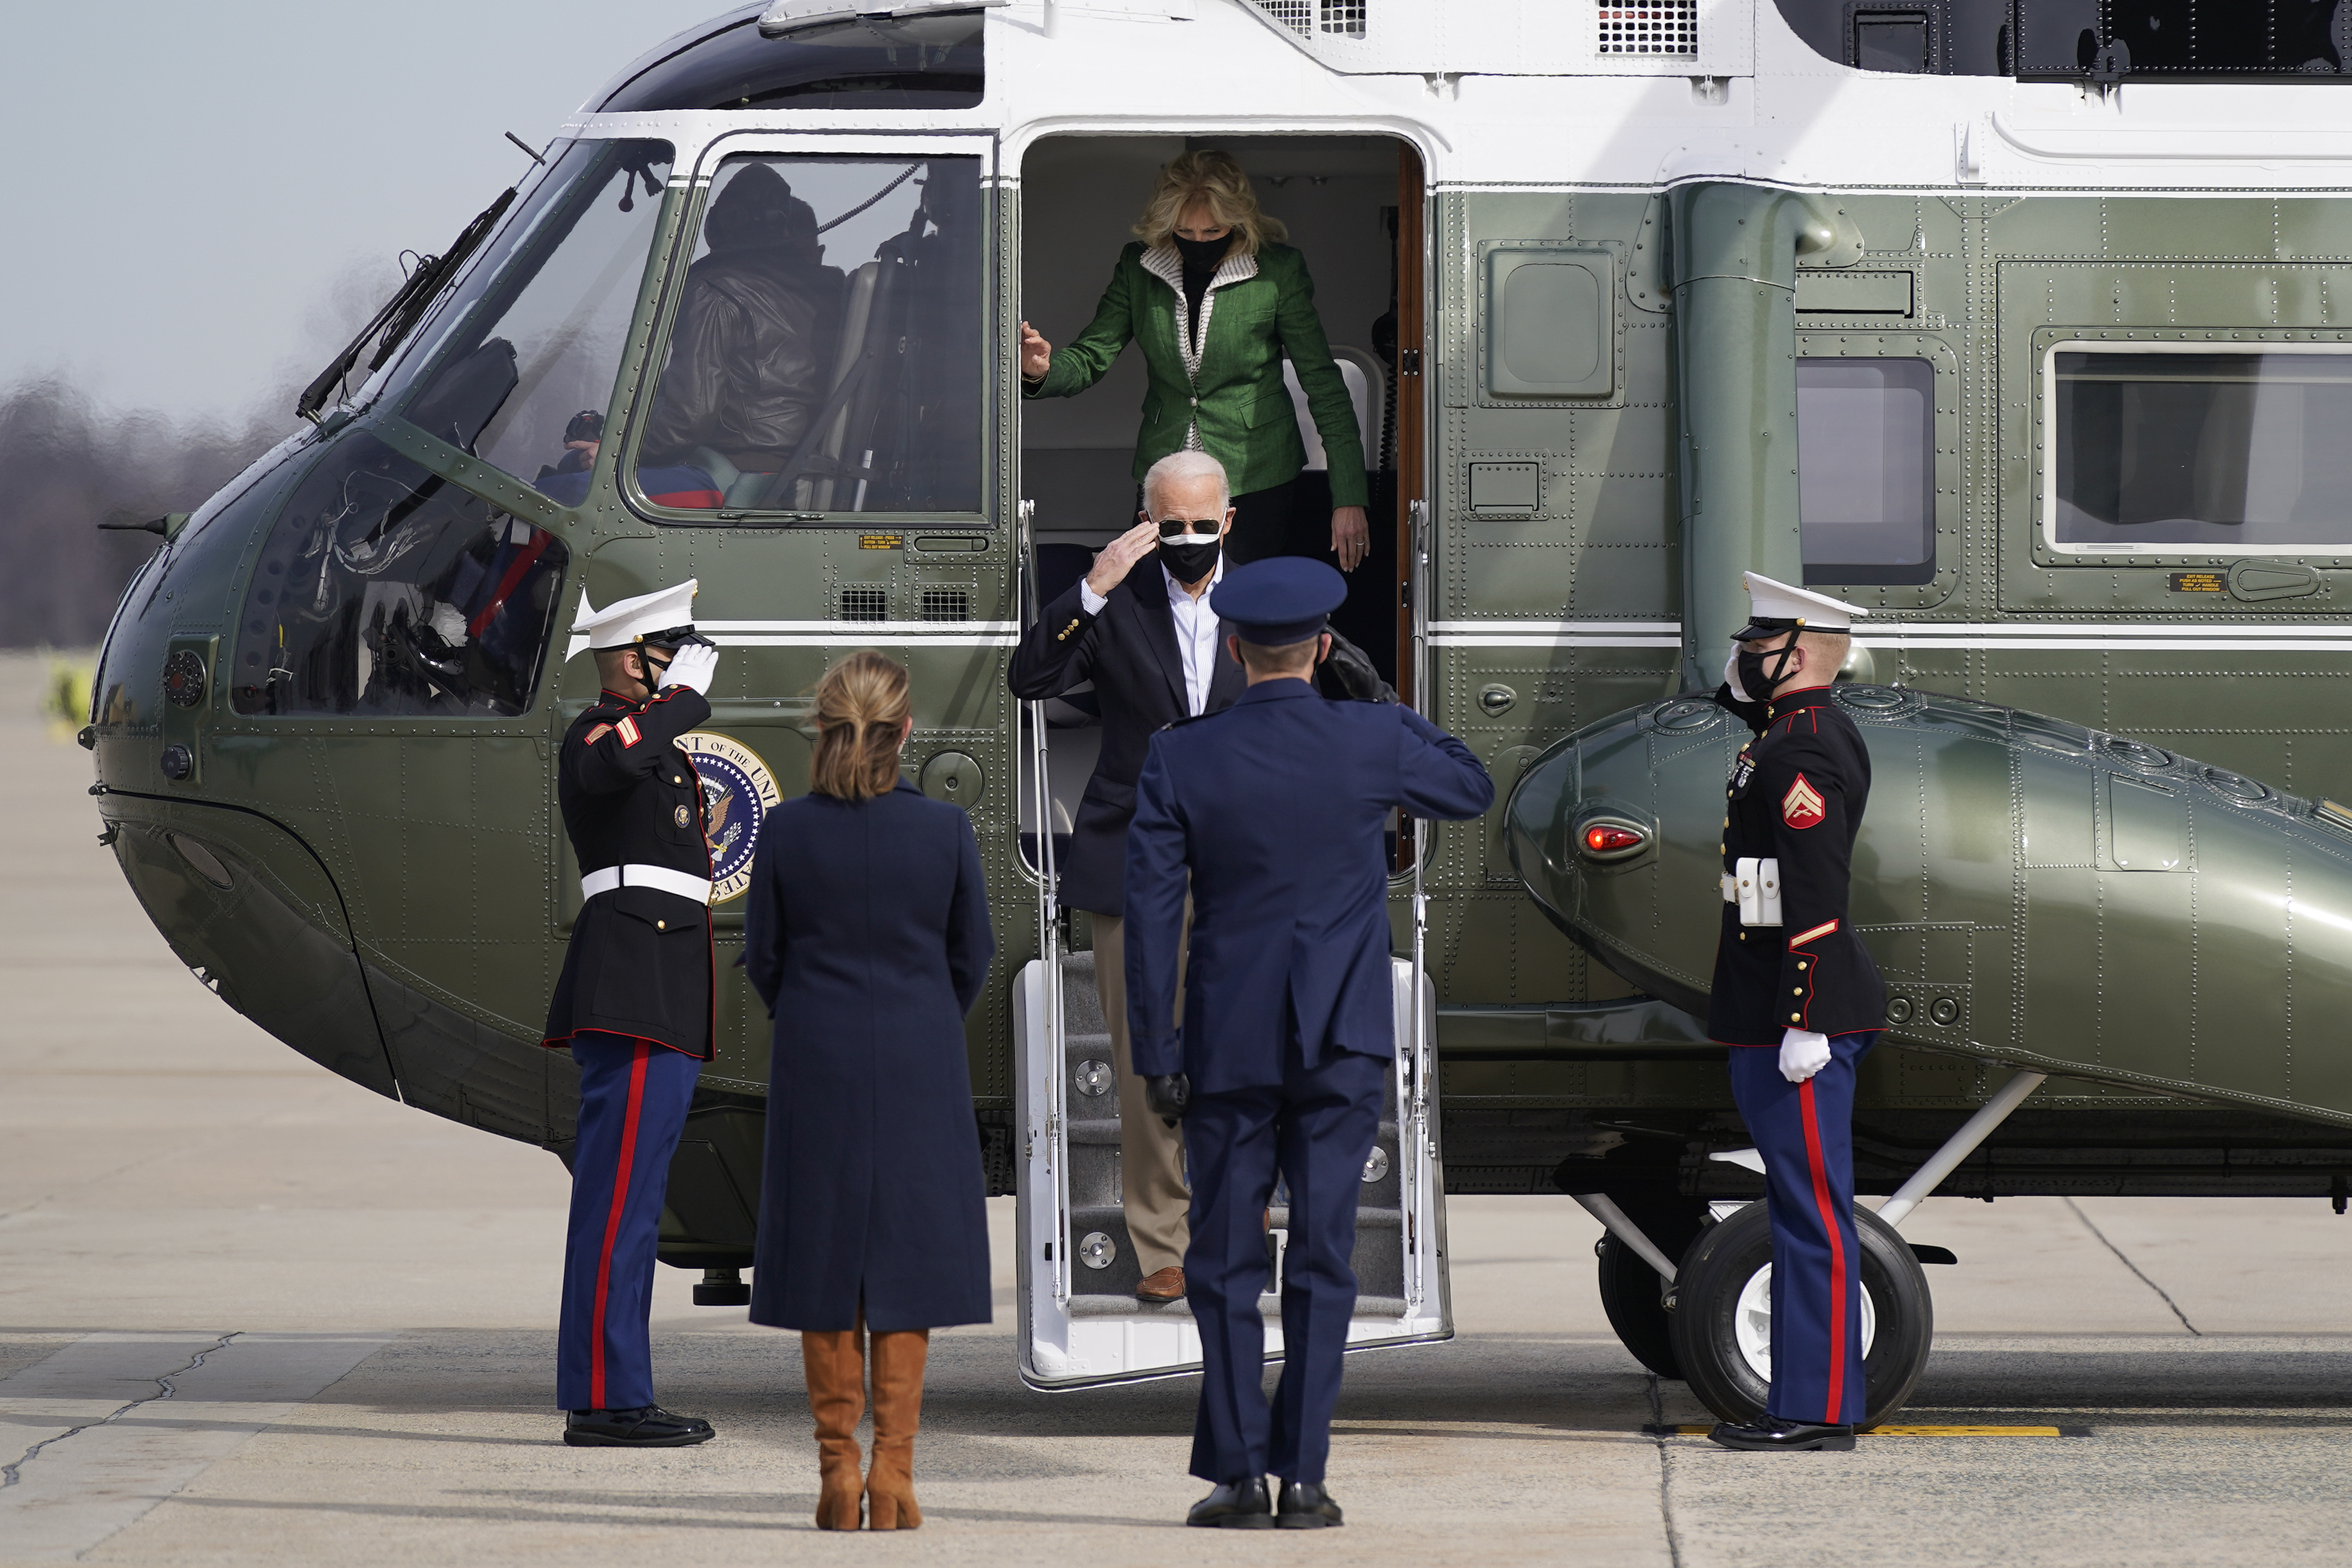 Biden drops Trump design for new Air Force One